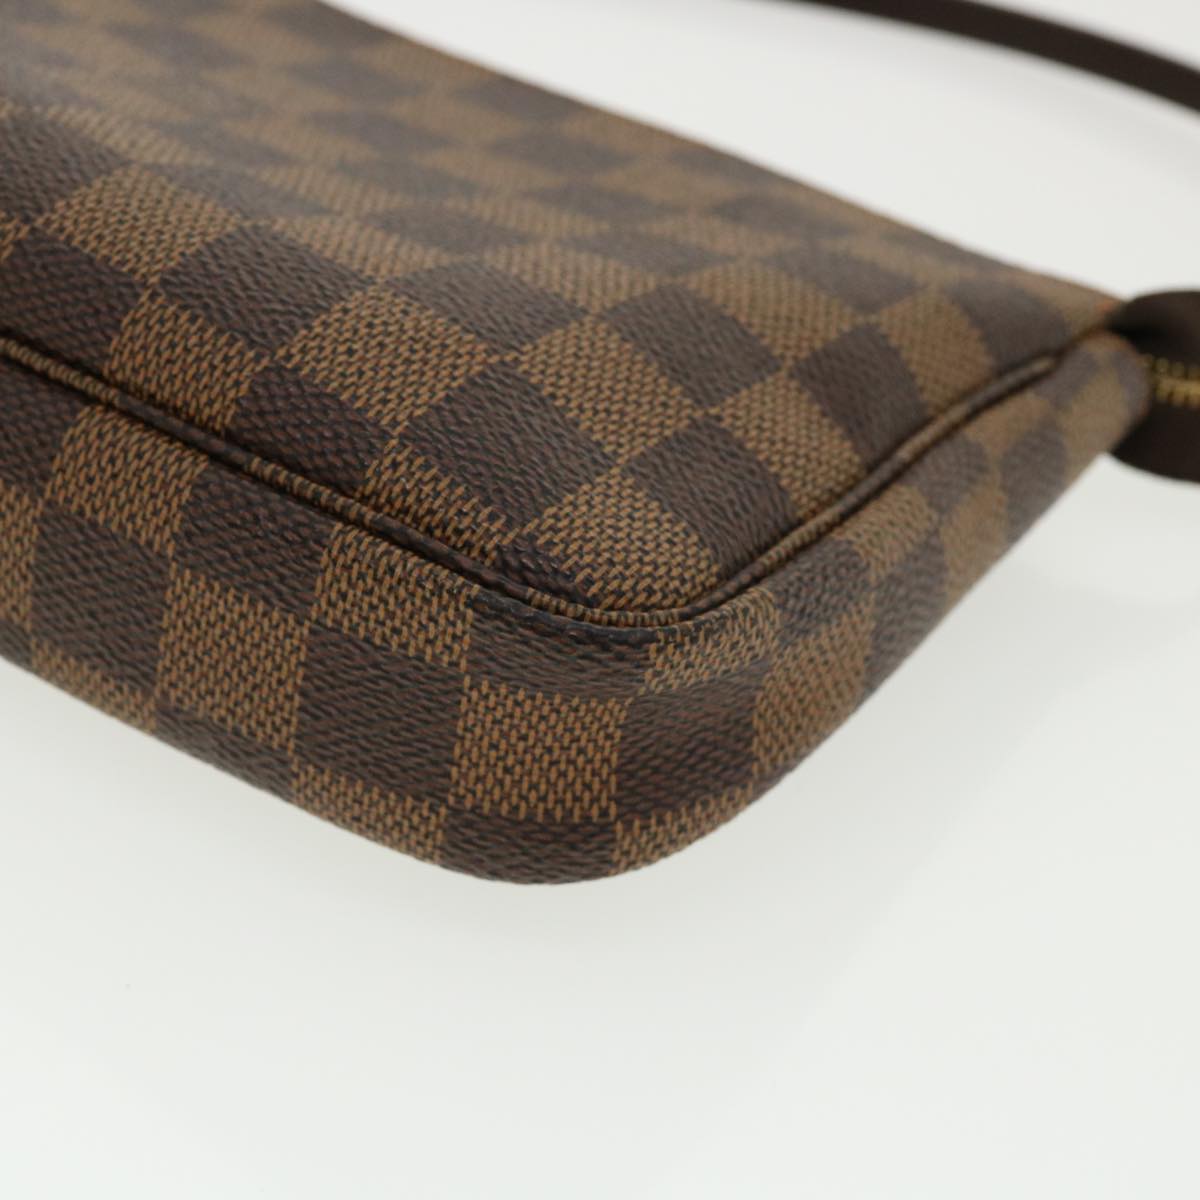 Louis Vuitton Pochette Handbag